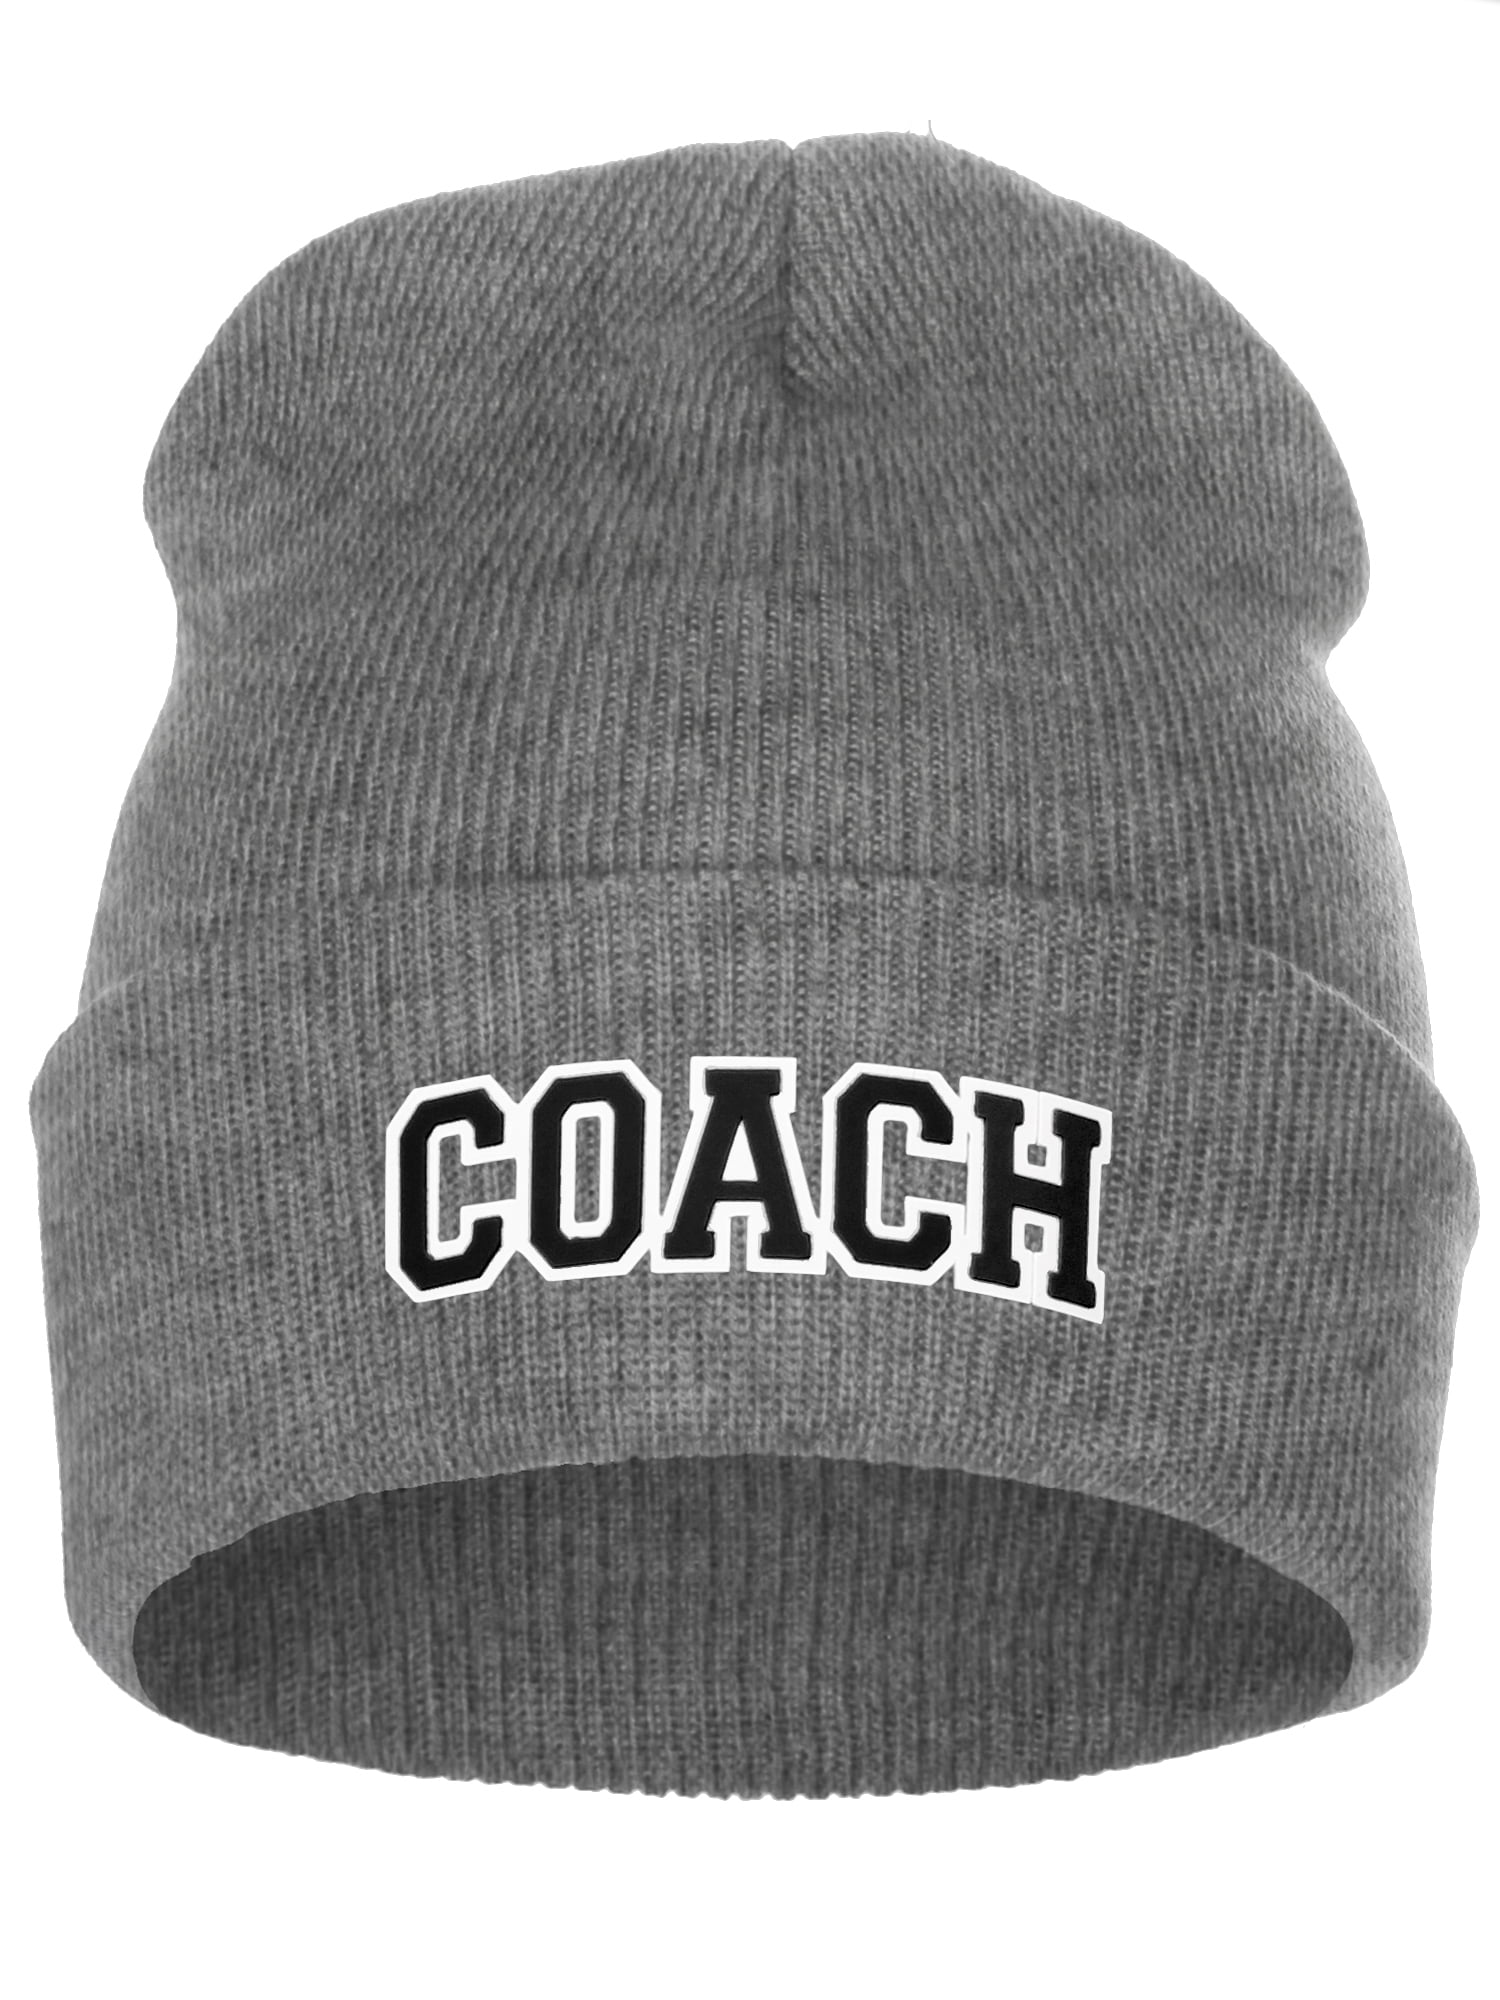 Nay Team Letters Black Knit Sports Winter I&W Coach Arch White Hat, Beanie Beanie Cuffed